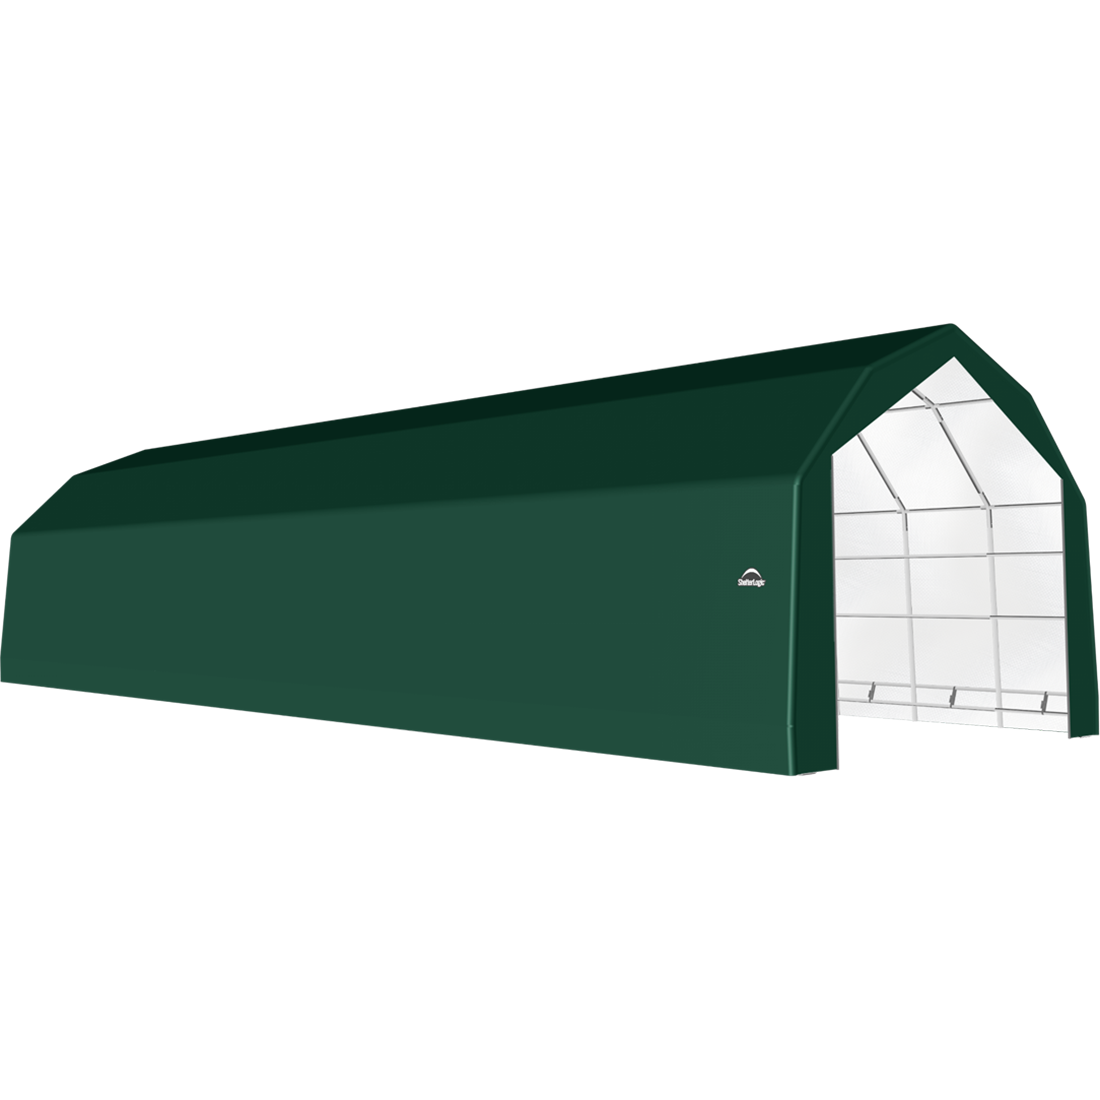 ShelterTech SP Series Barn Shelter, 20 ft. x 52 ft. x 15 ft. Heavy Duty PVC 14.5 oz. Green